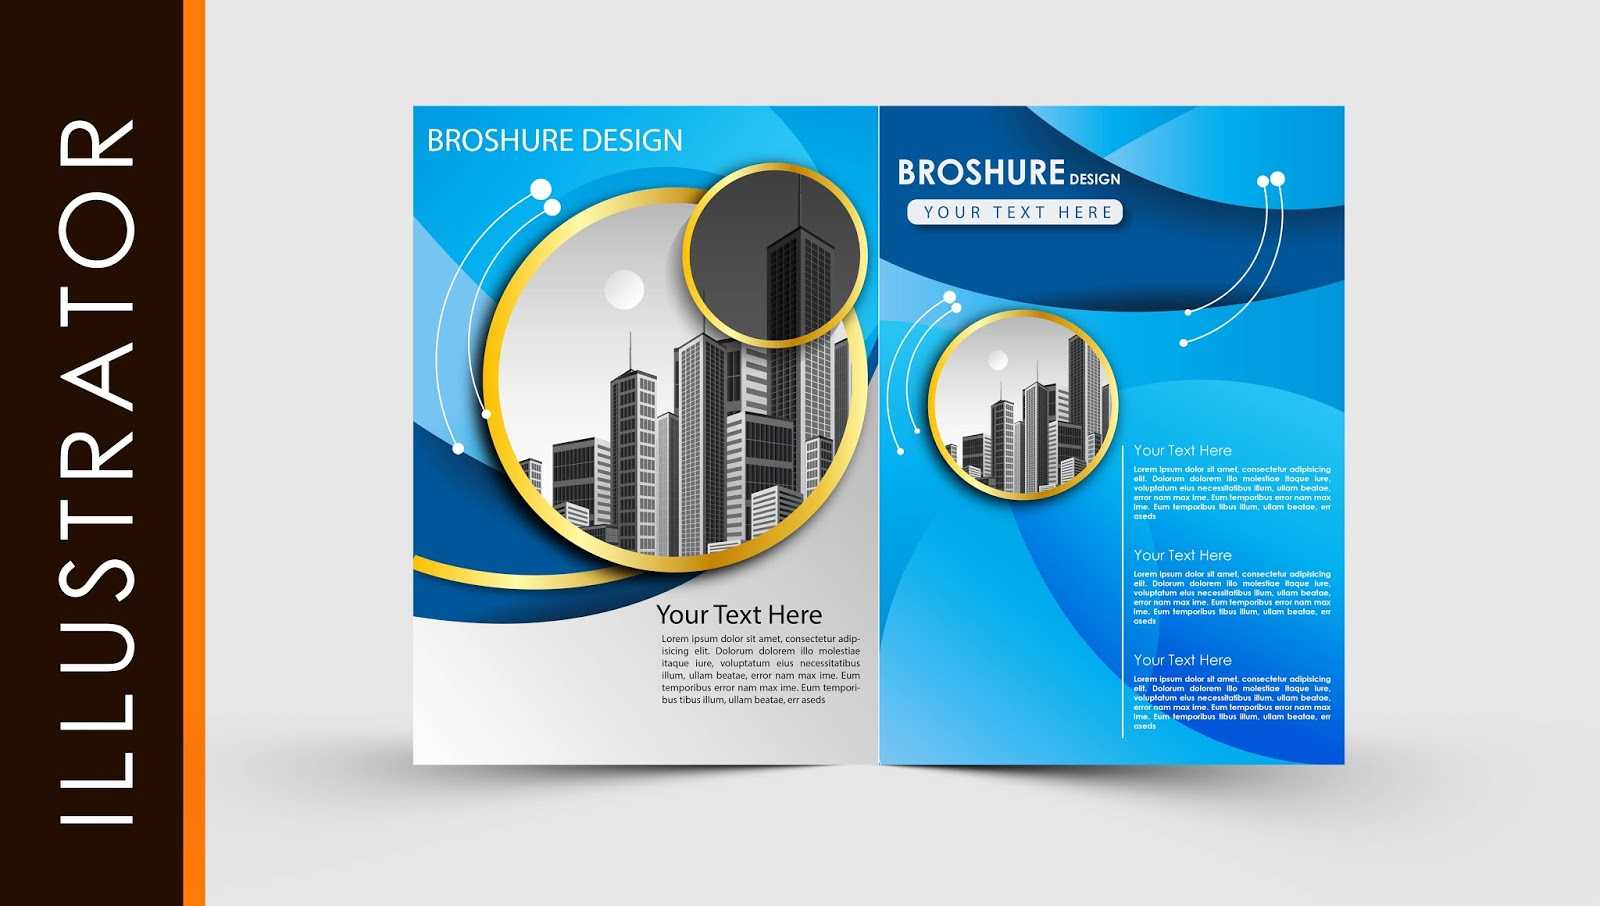 Free Download Adobe Illustrator Template Brochure Two Fold With Illustrator Brochure Templates Free Download